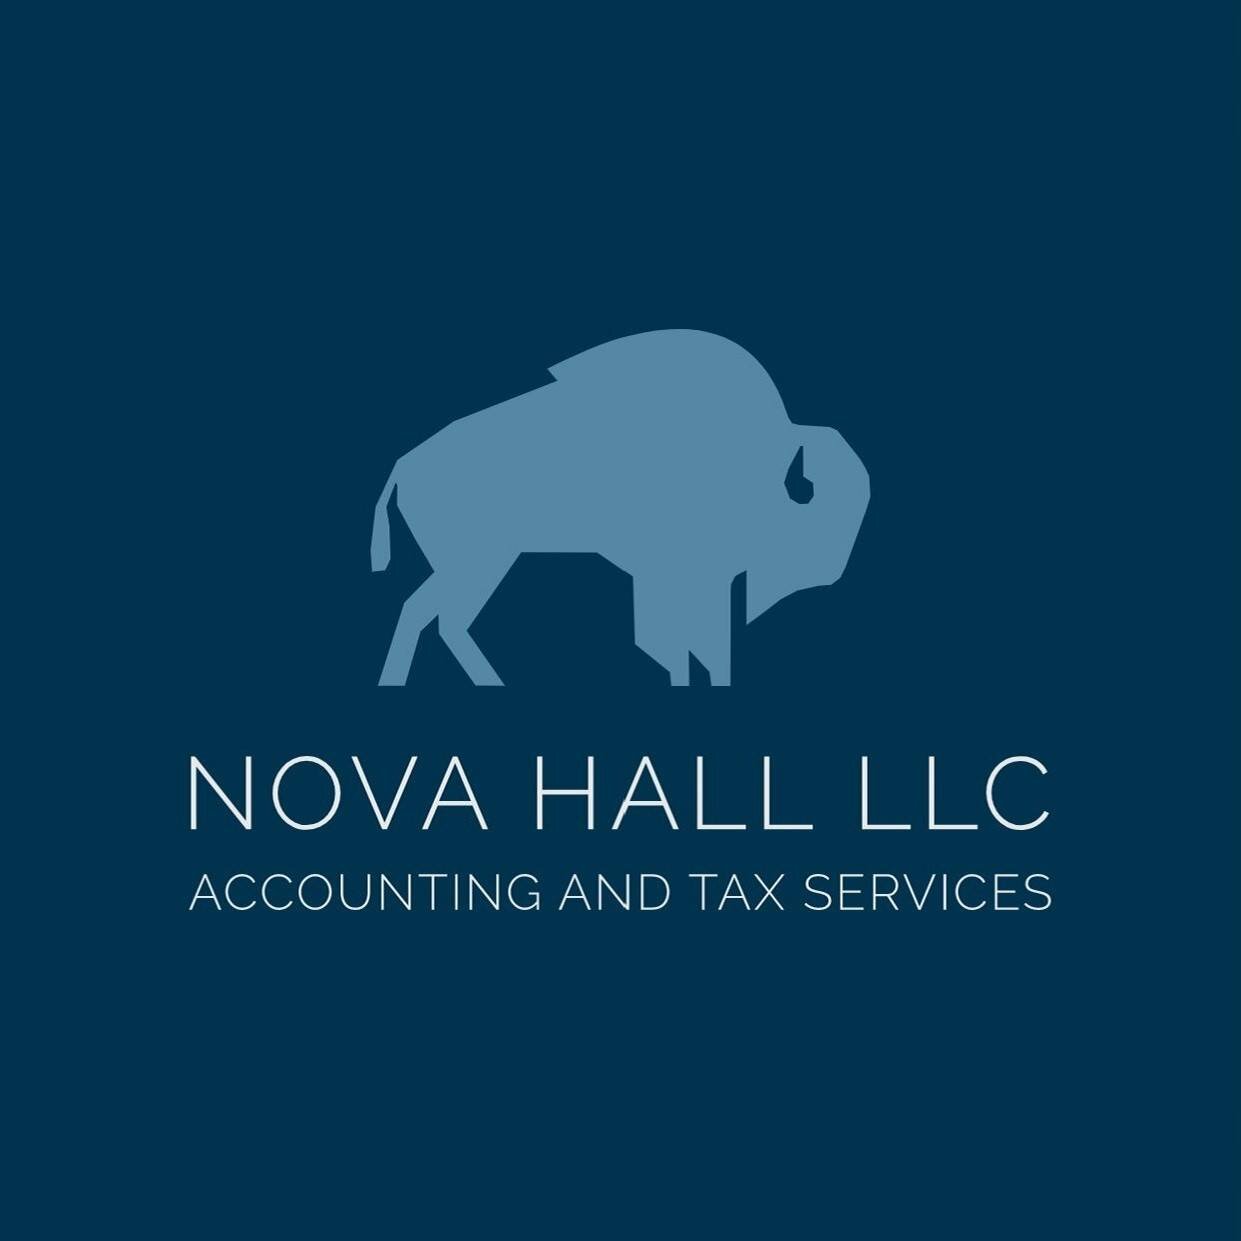 NOVA HALL LLC